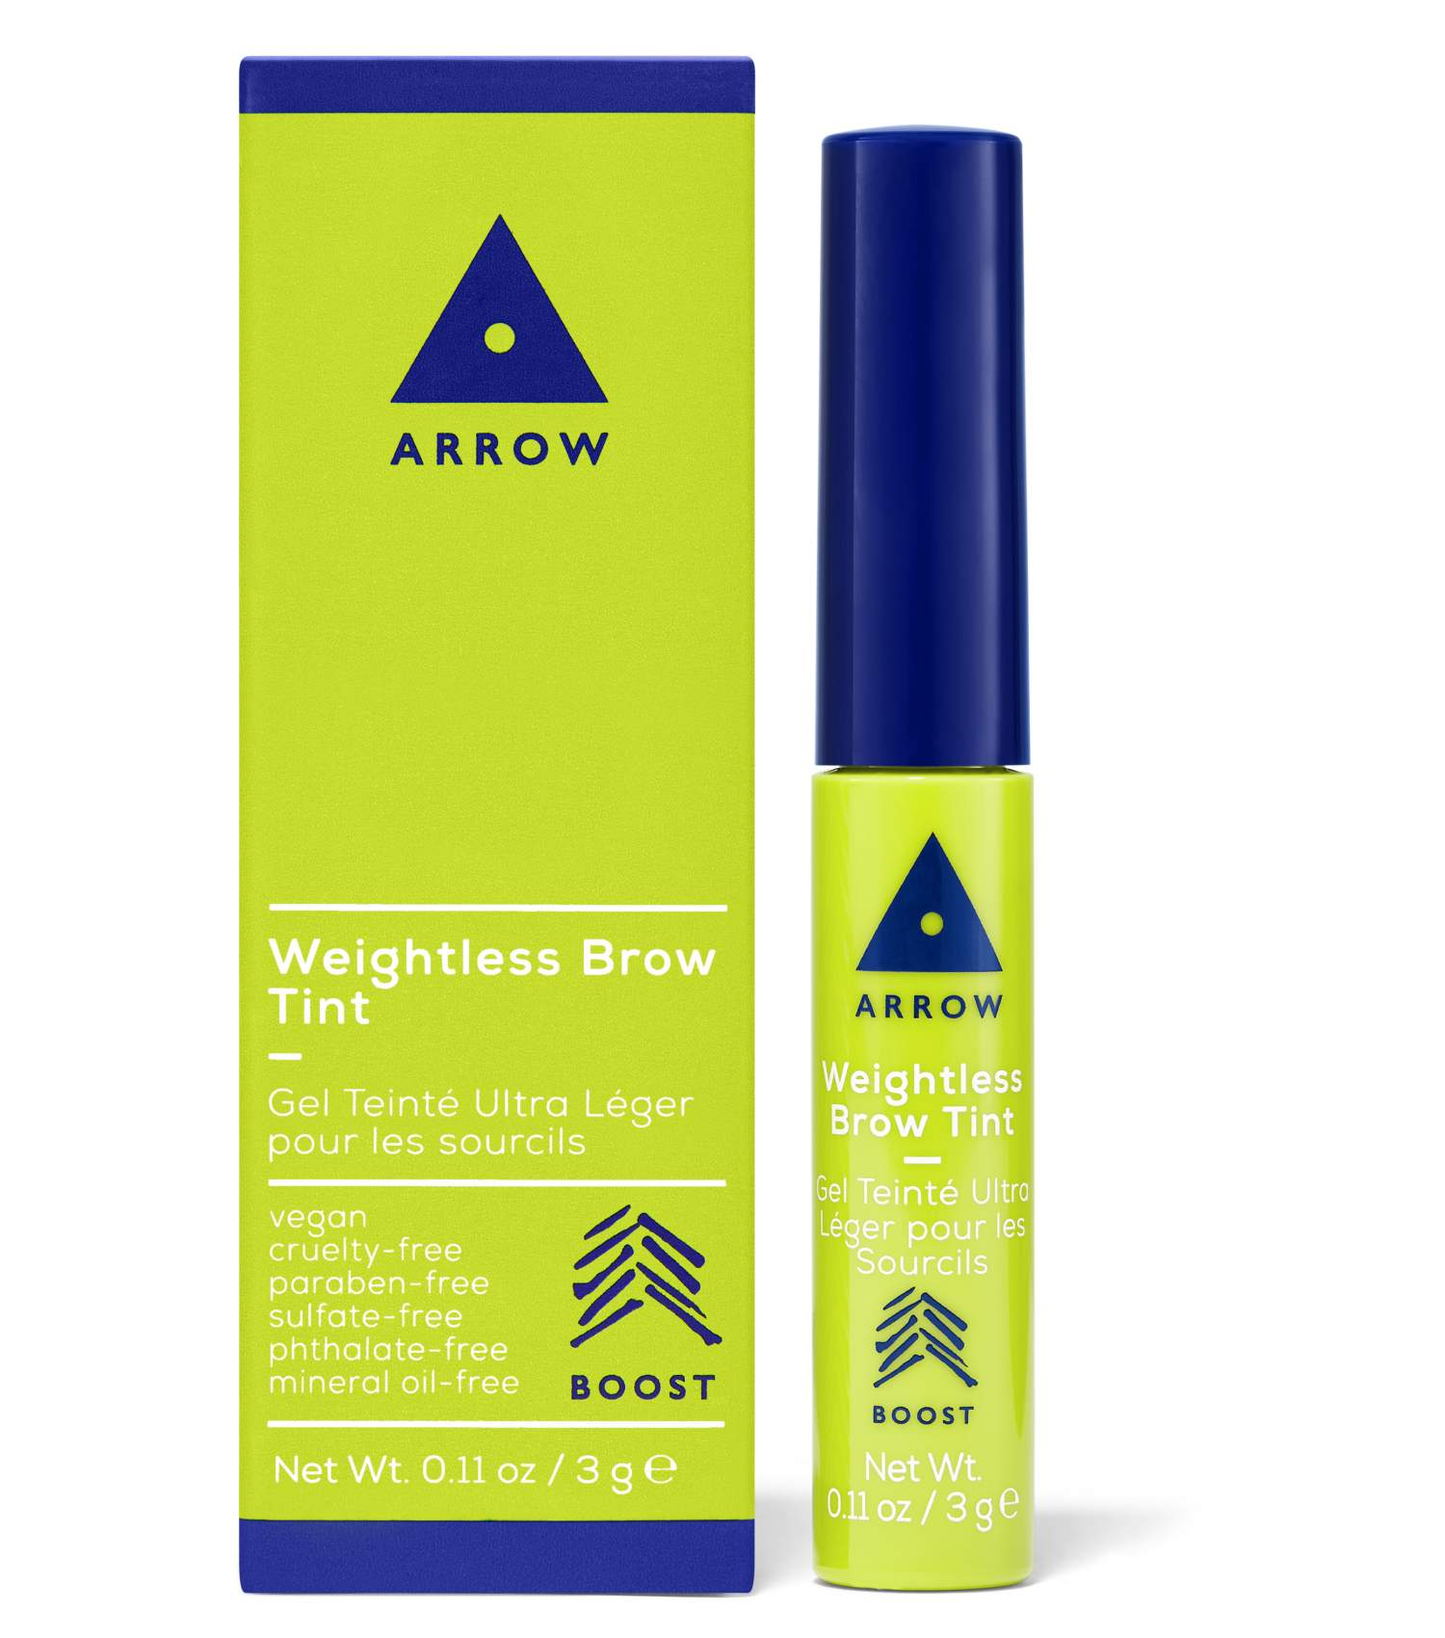 ARROW Weightless Brow Tint